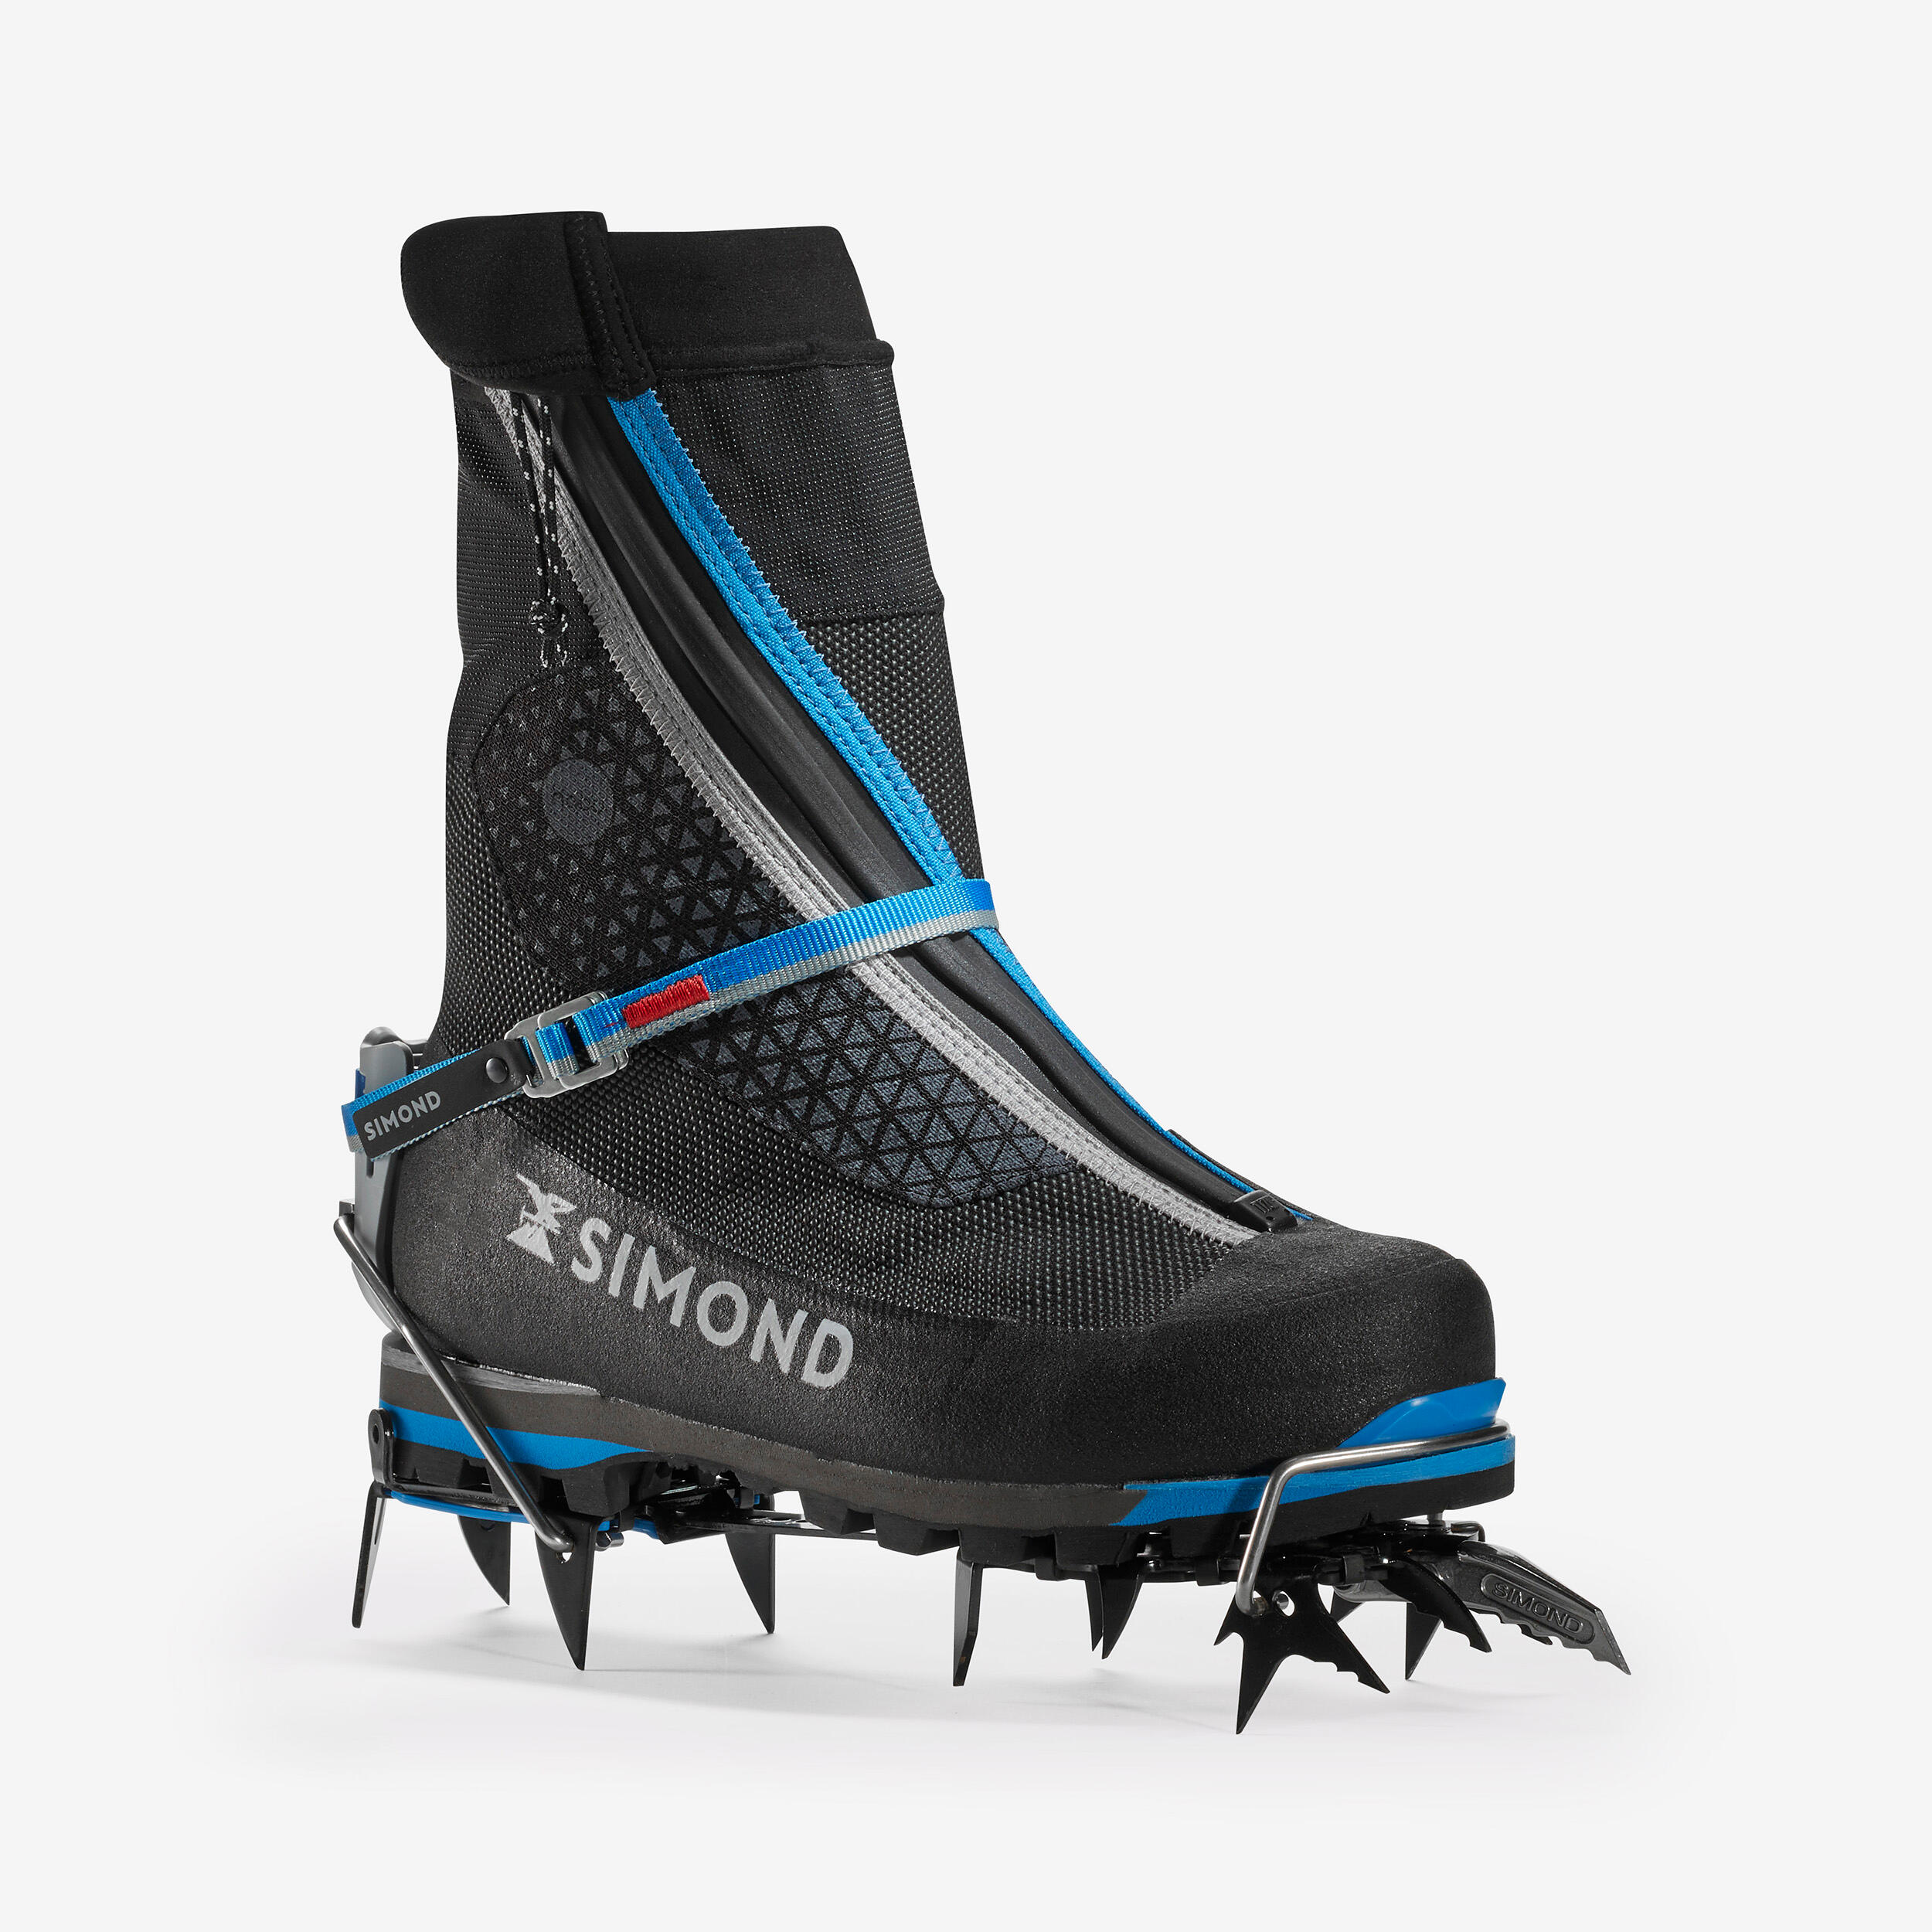 All-season mountaineering boots - ICE Blue/Black 12/12